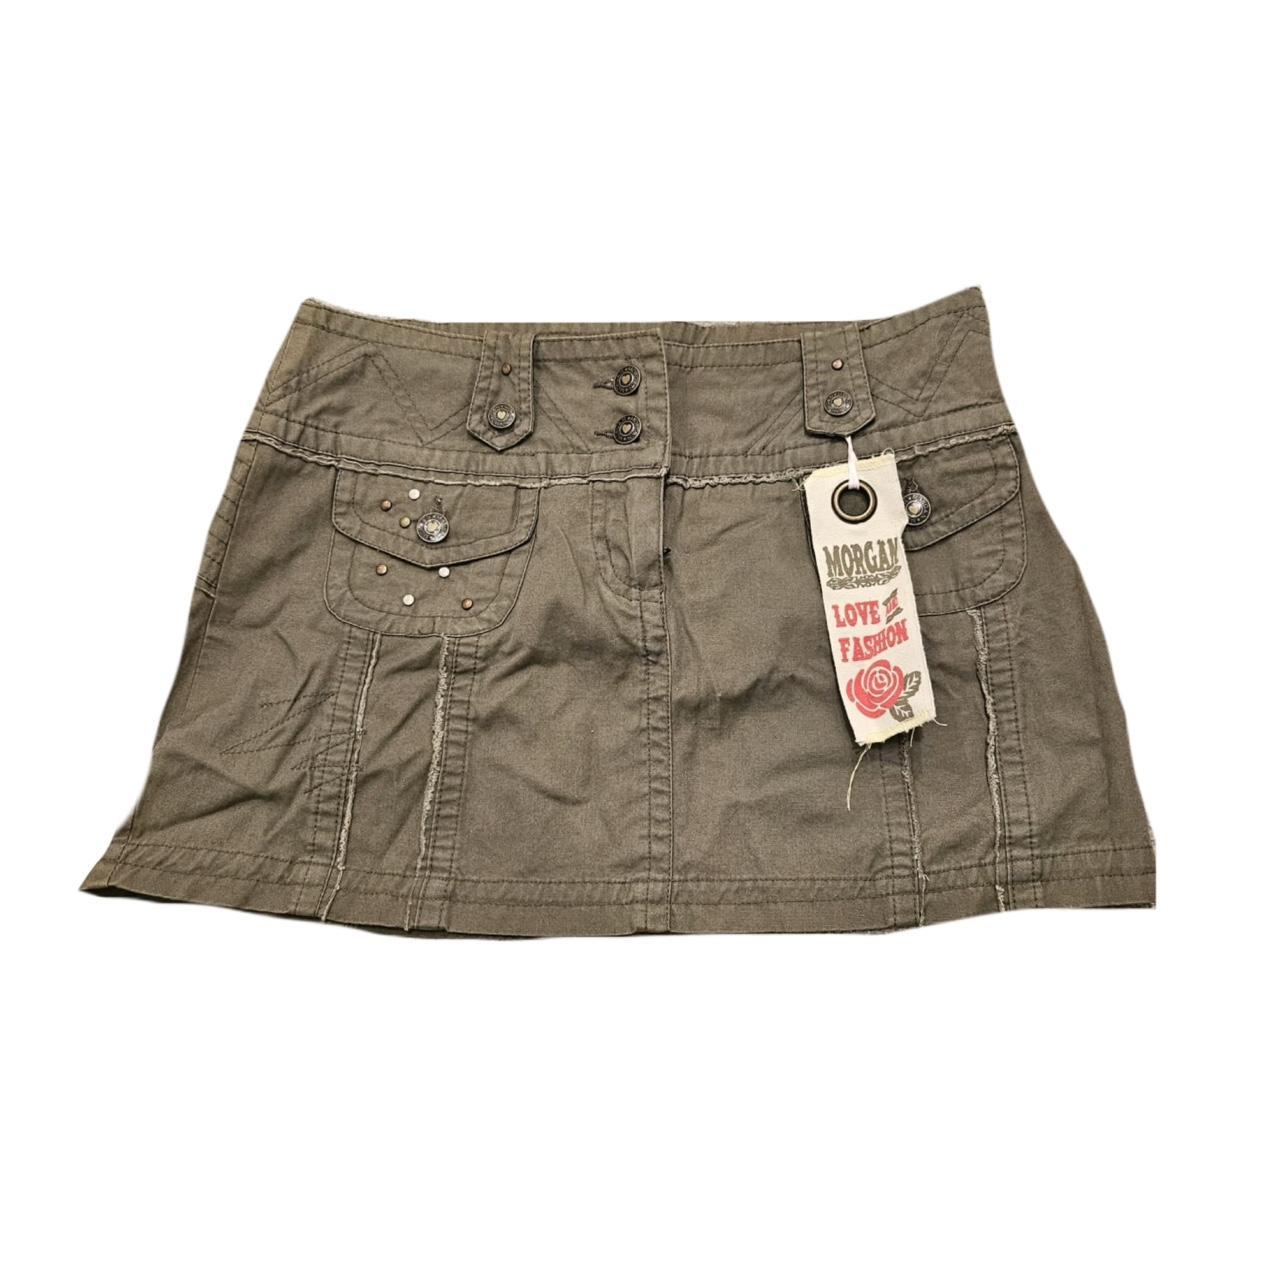 vintage MORGAN DE TOI khaki cargo skirt ˚ʚ♡ɞ˚ ♡... - Depop